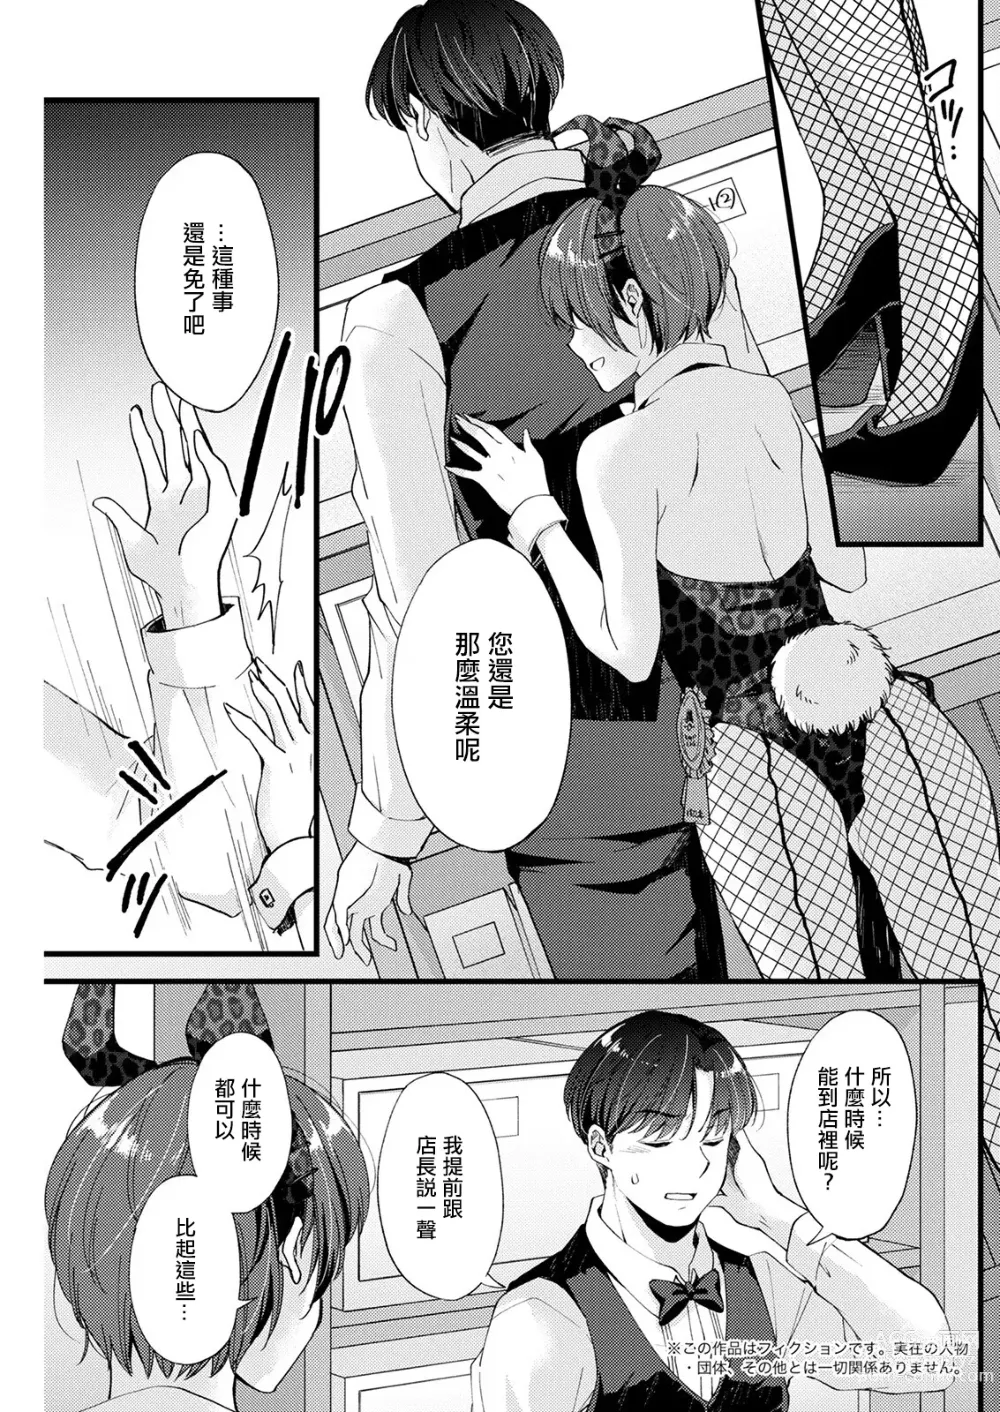 Page 3 of manga Tadaima tte Iwasete